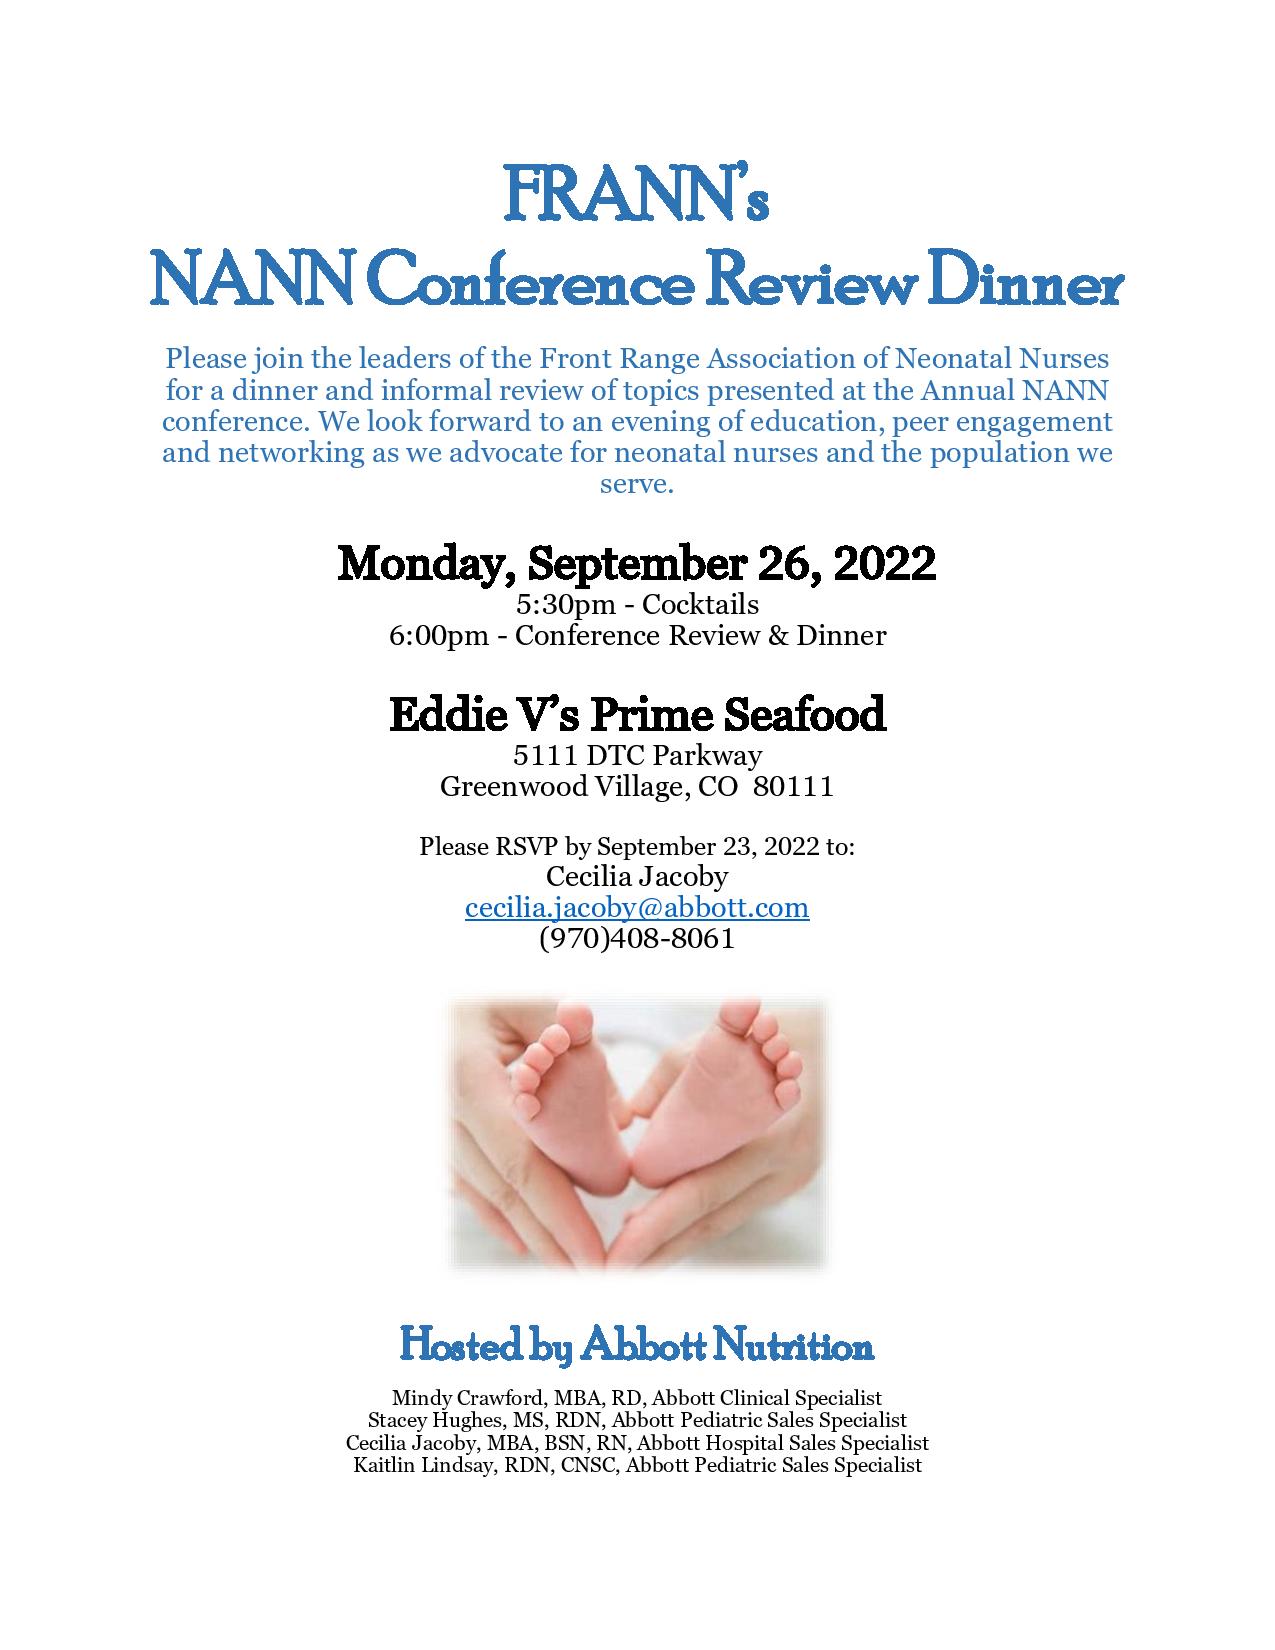 NANN Conference Review Dinner Front Range Association of Neonatal Nurses